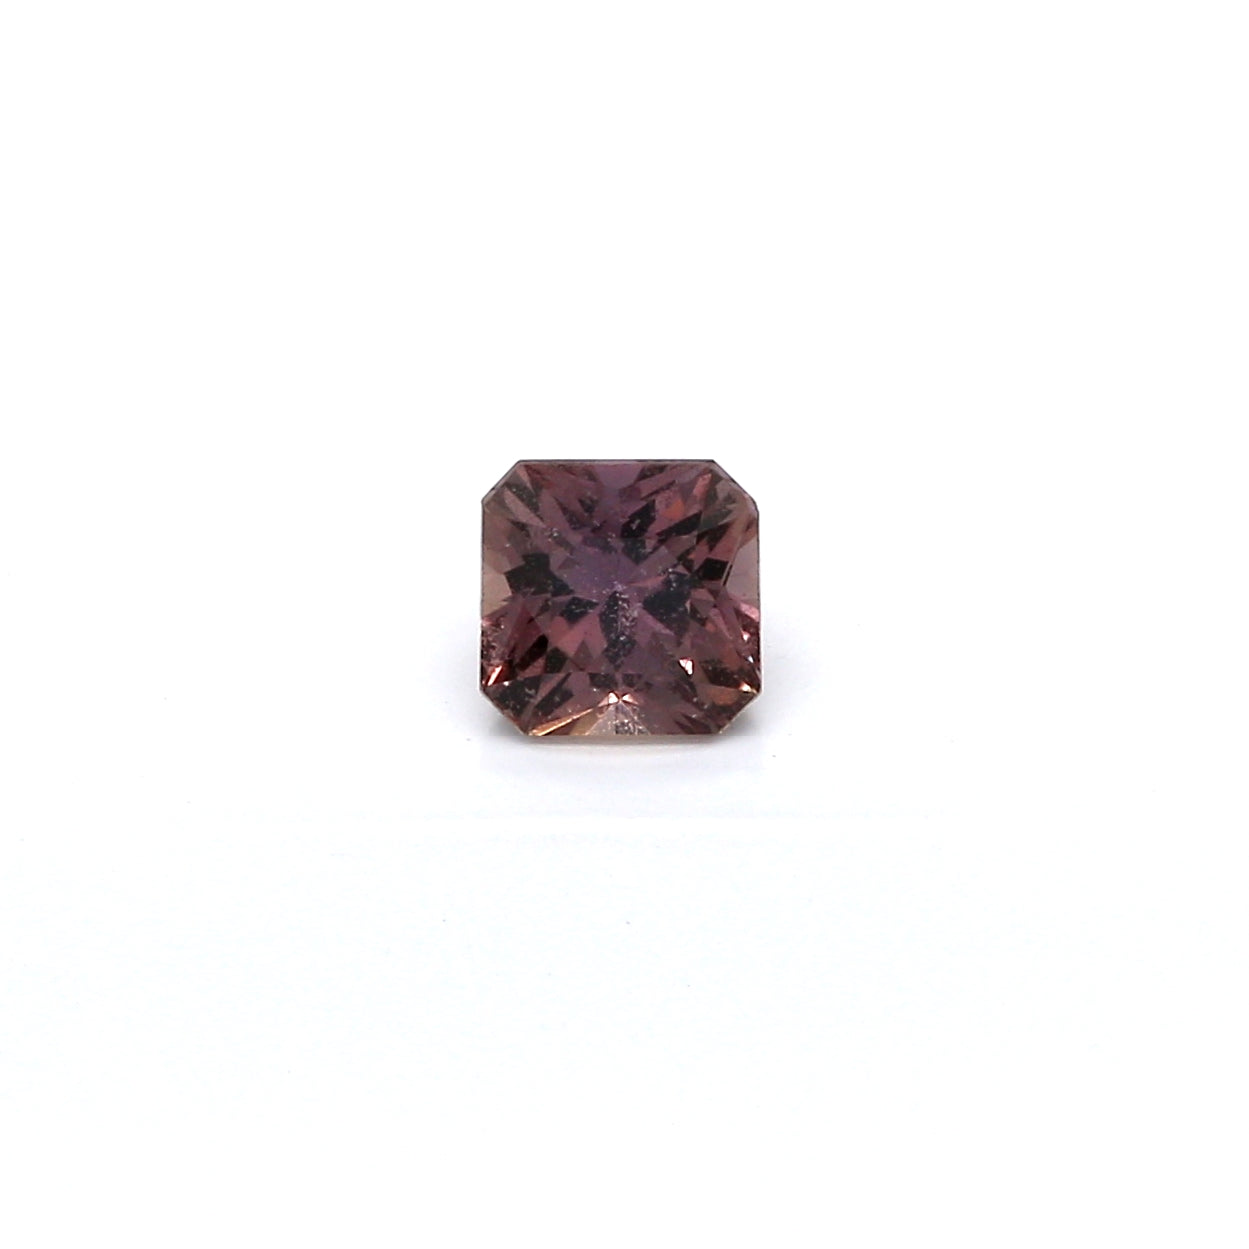 0.77ct Brownish Purple, Radiant Sapphire, No Heat, Madagascar - 4.95 x 4.91 x 3.47mm